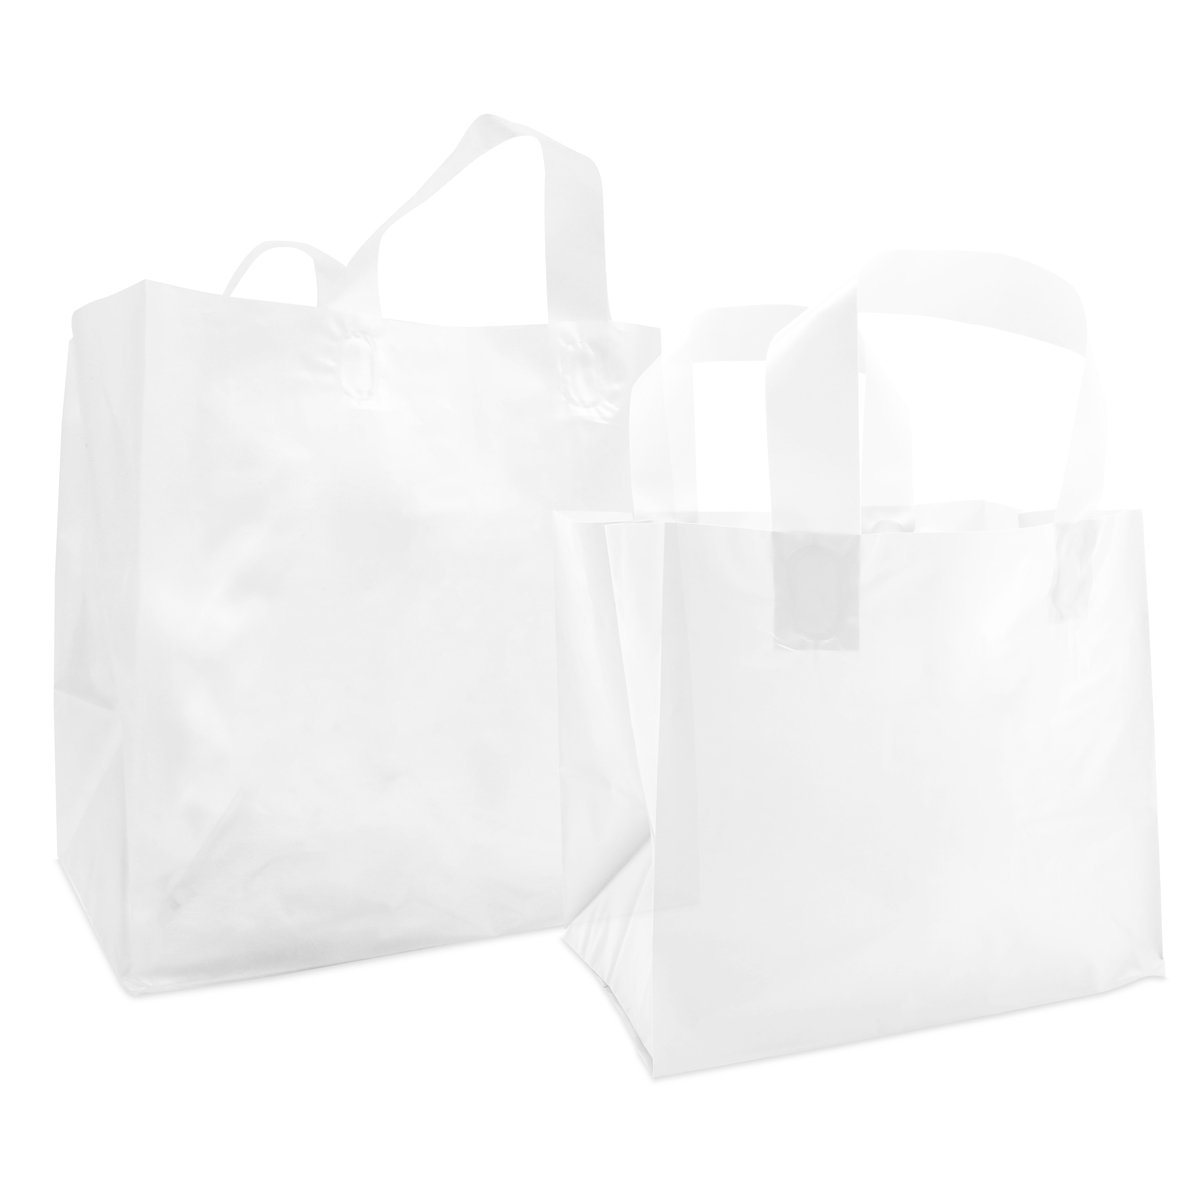 Plastic take away bags